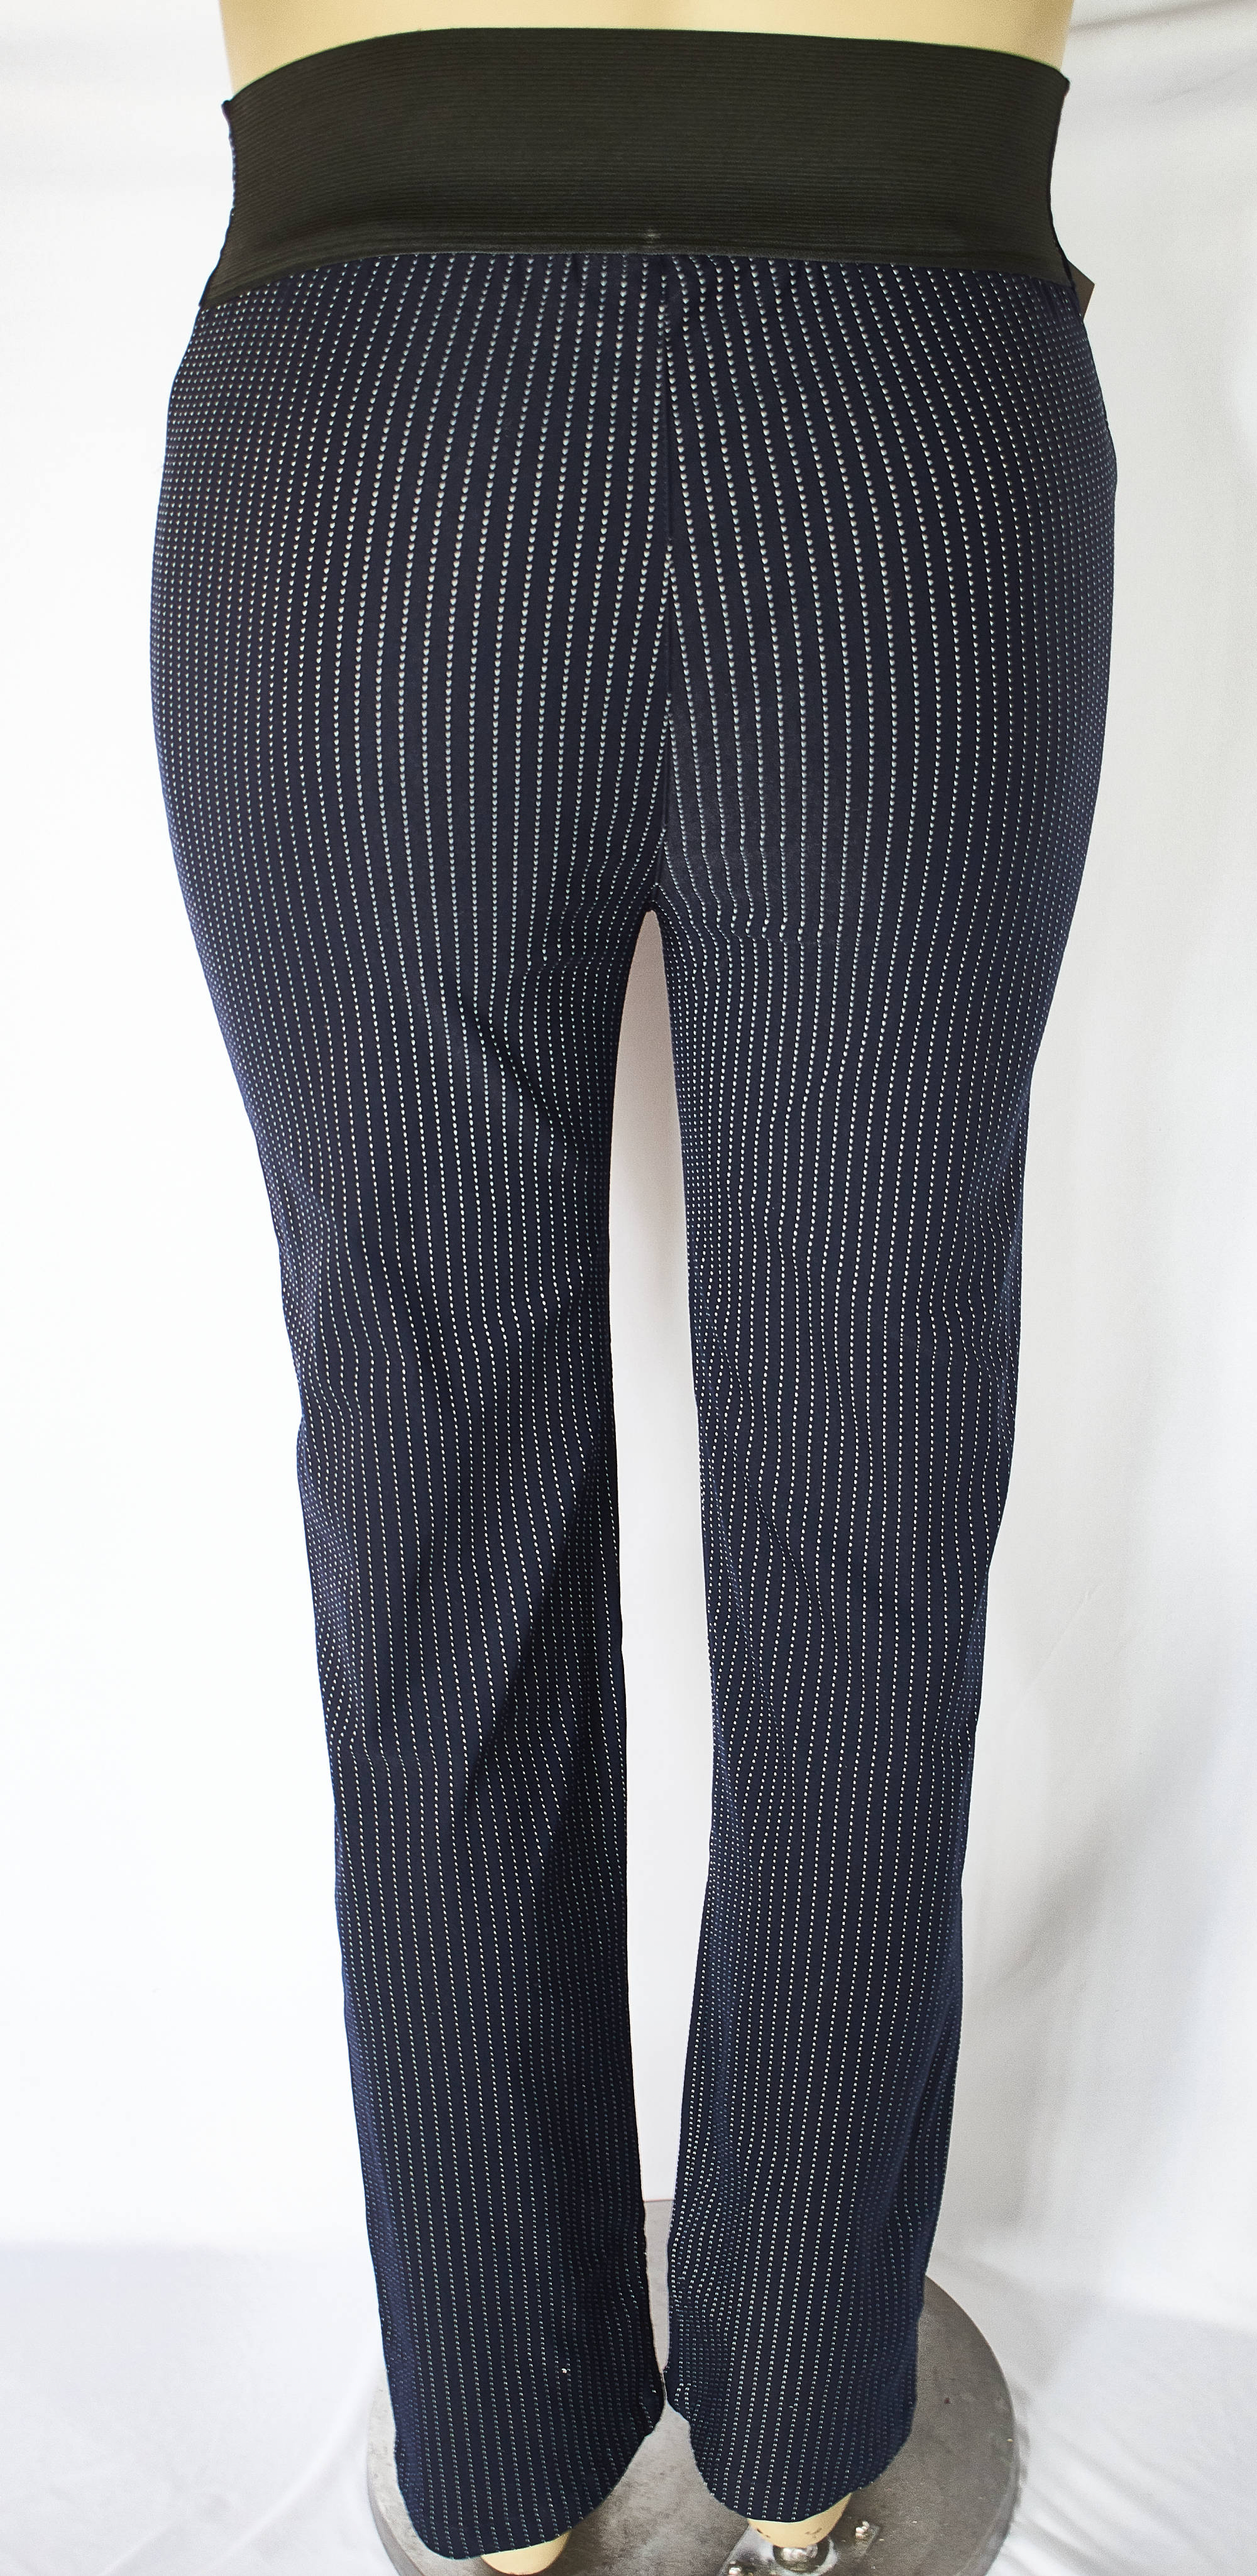 Pantalon tipo leggins color azul Tallas 16 a la 22 de JoPlus Tallas Grandes